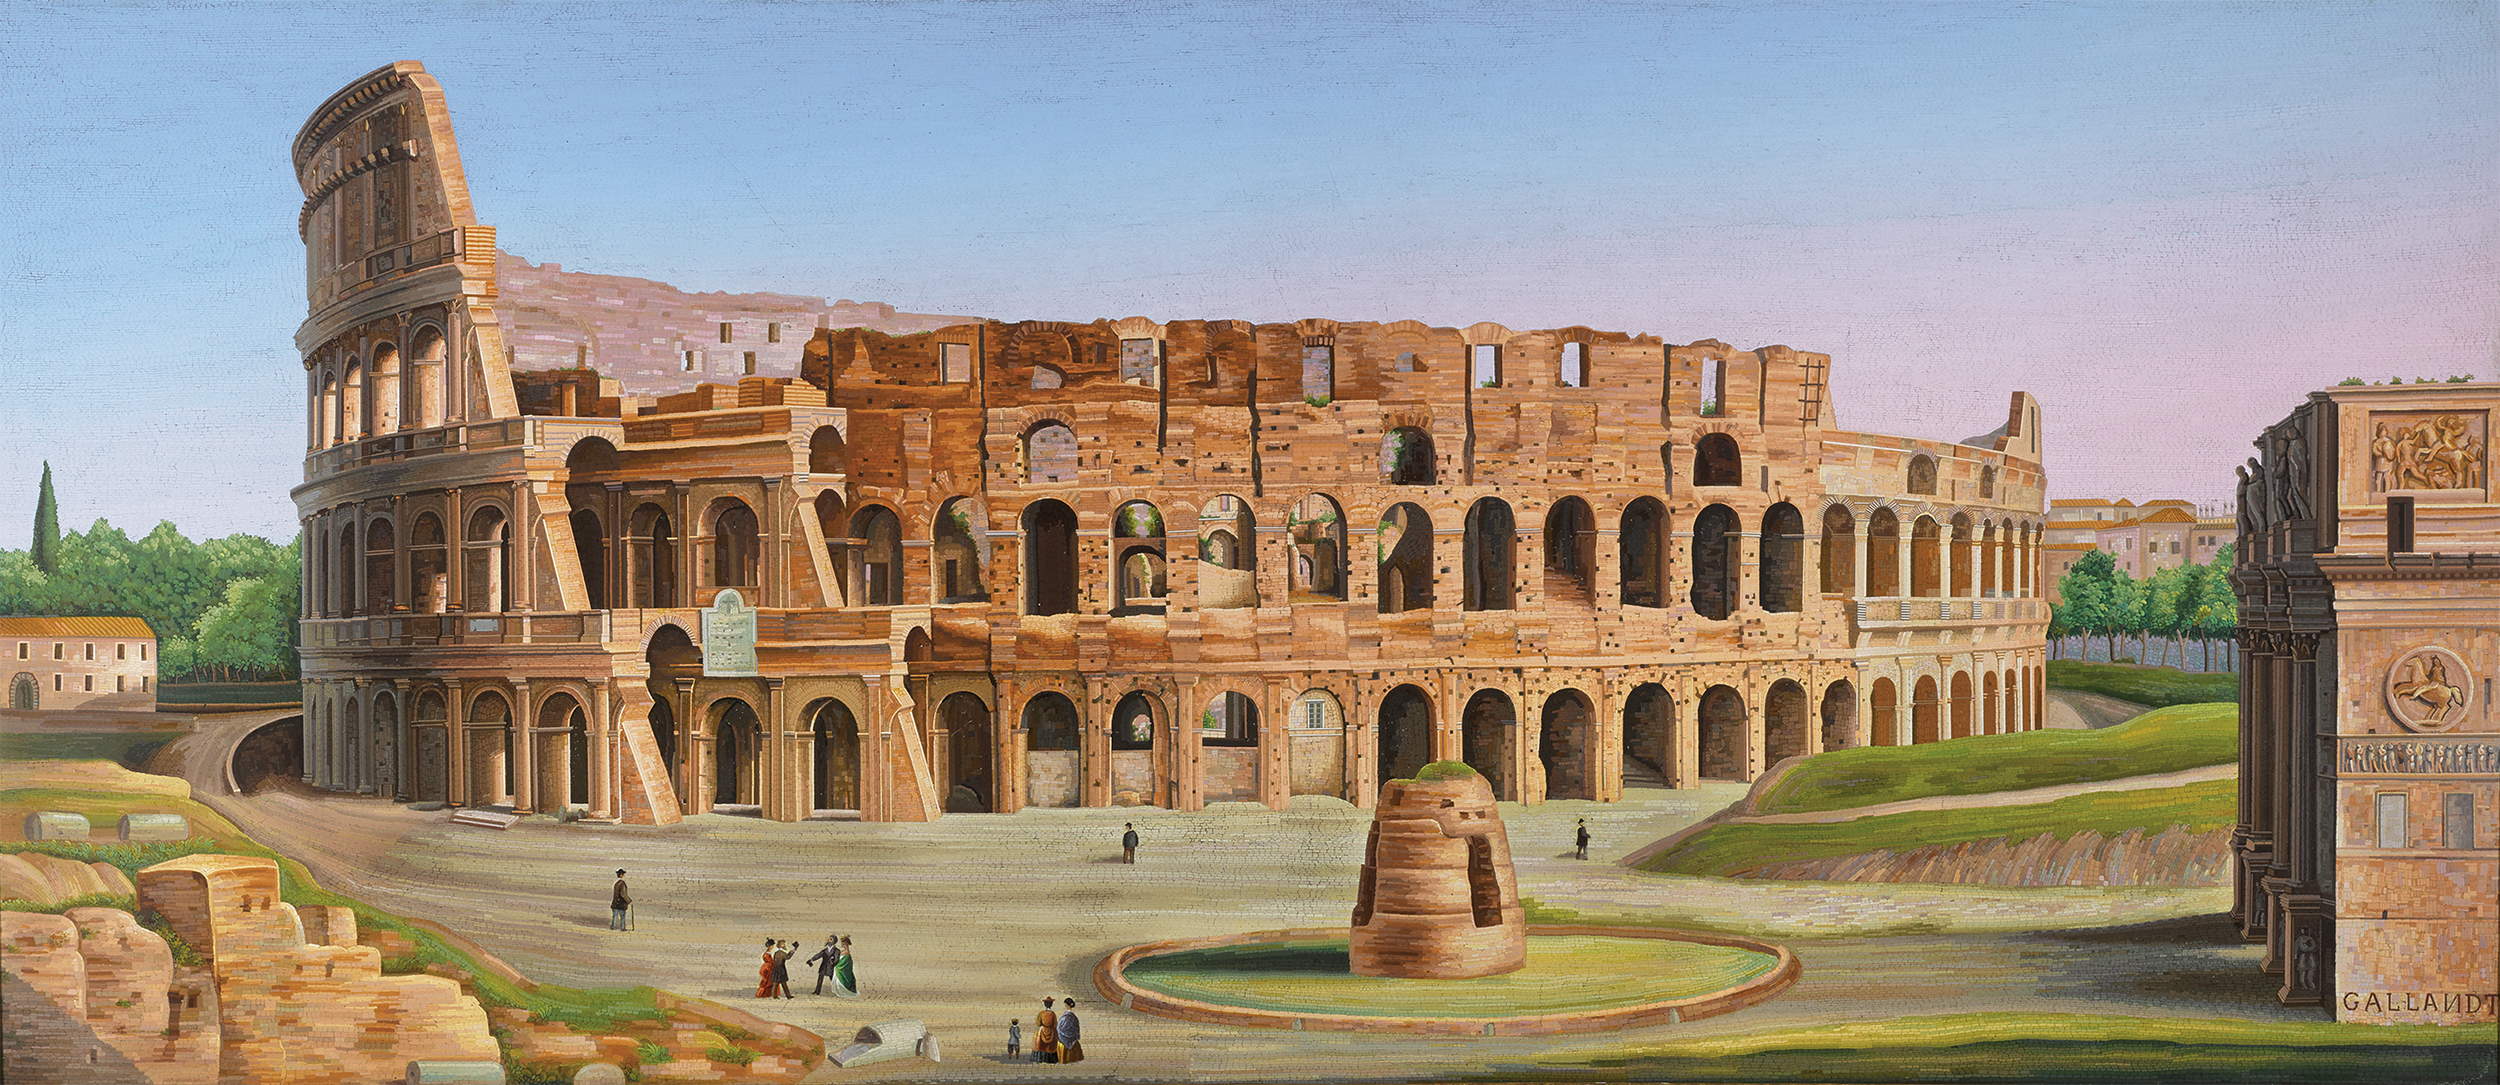 The Colosseum Micromosaic by Luigi Gallandt